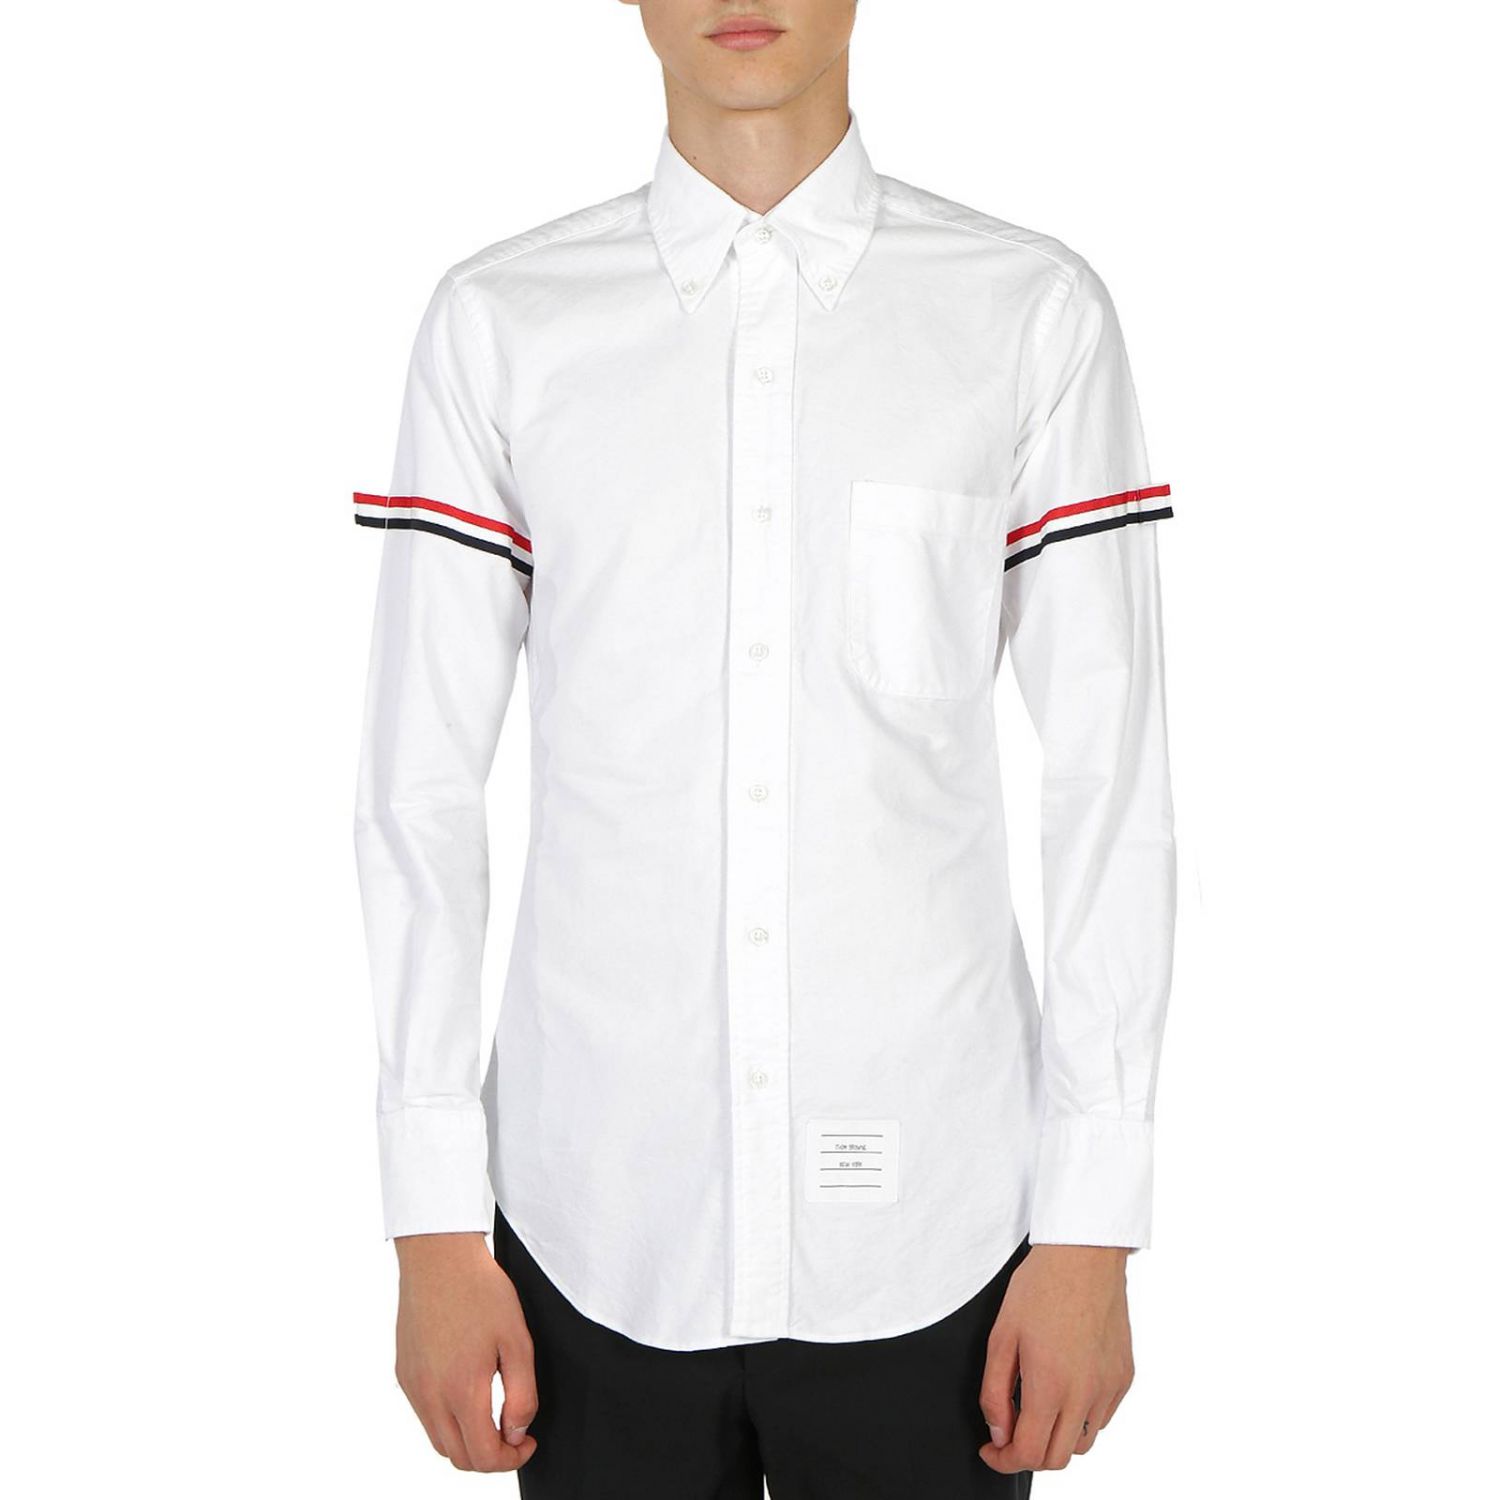 Thom Browne Outlet: Shirt men | Shirt Thom Browne Men White | Shirt ...